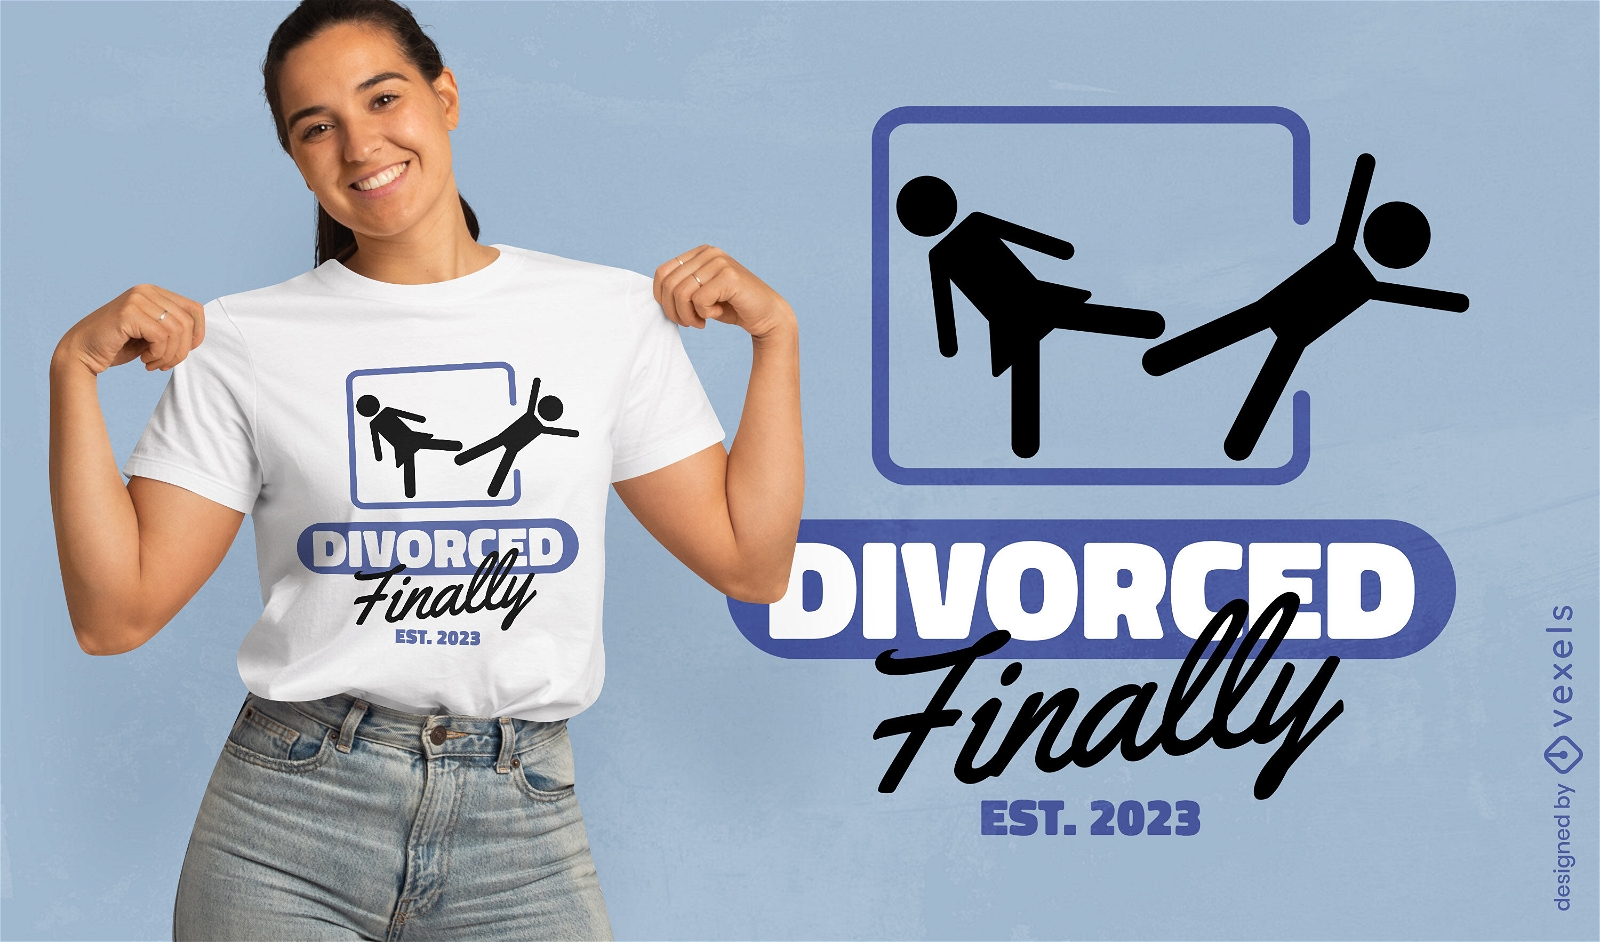 Divorced couple funny t-shirt design